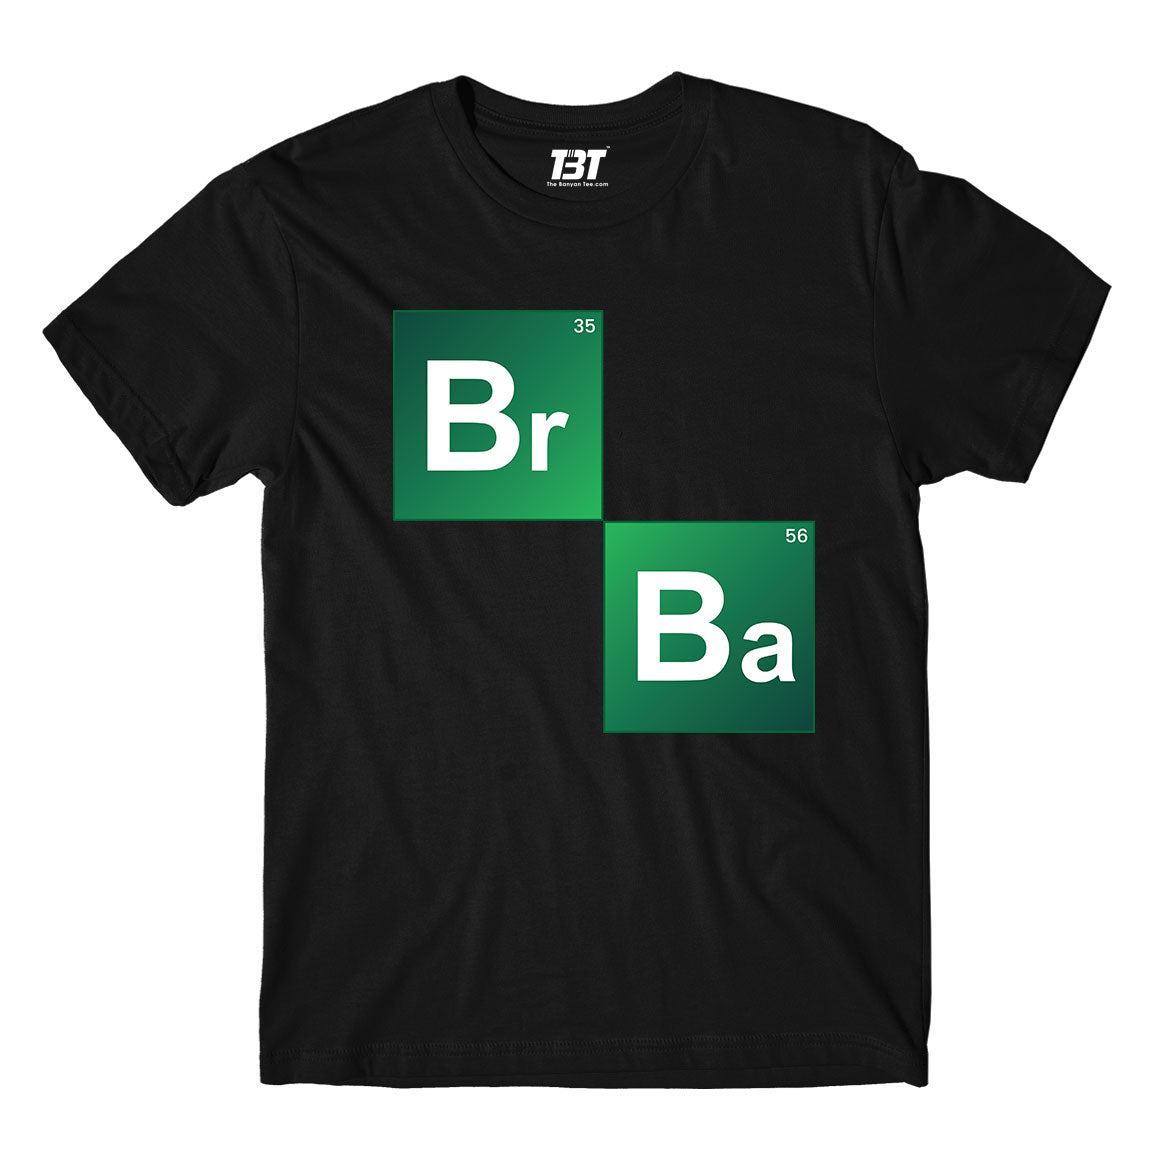 Breaking Bad T-shirt Merchandise Apparel Clothing